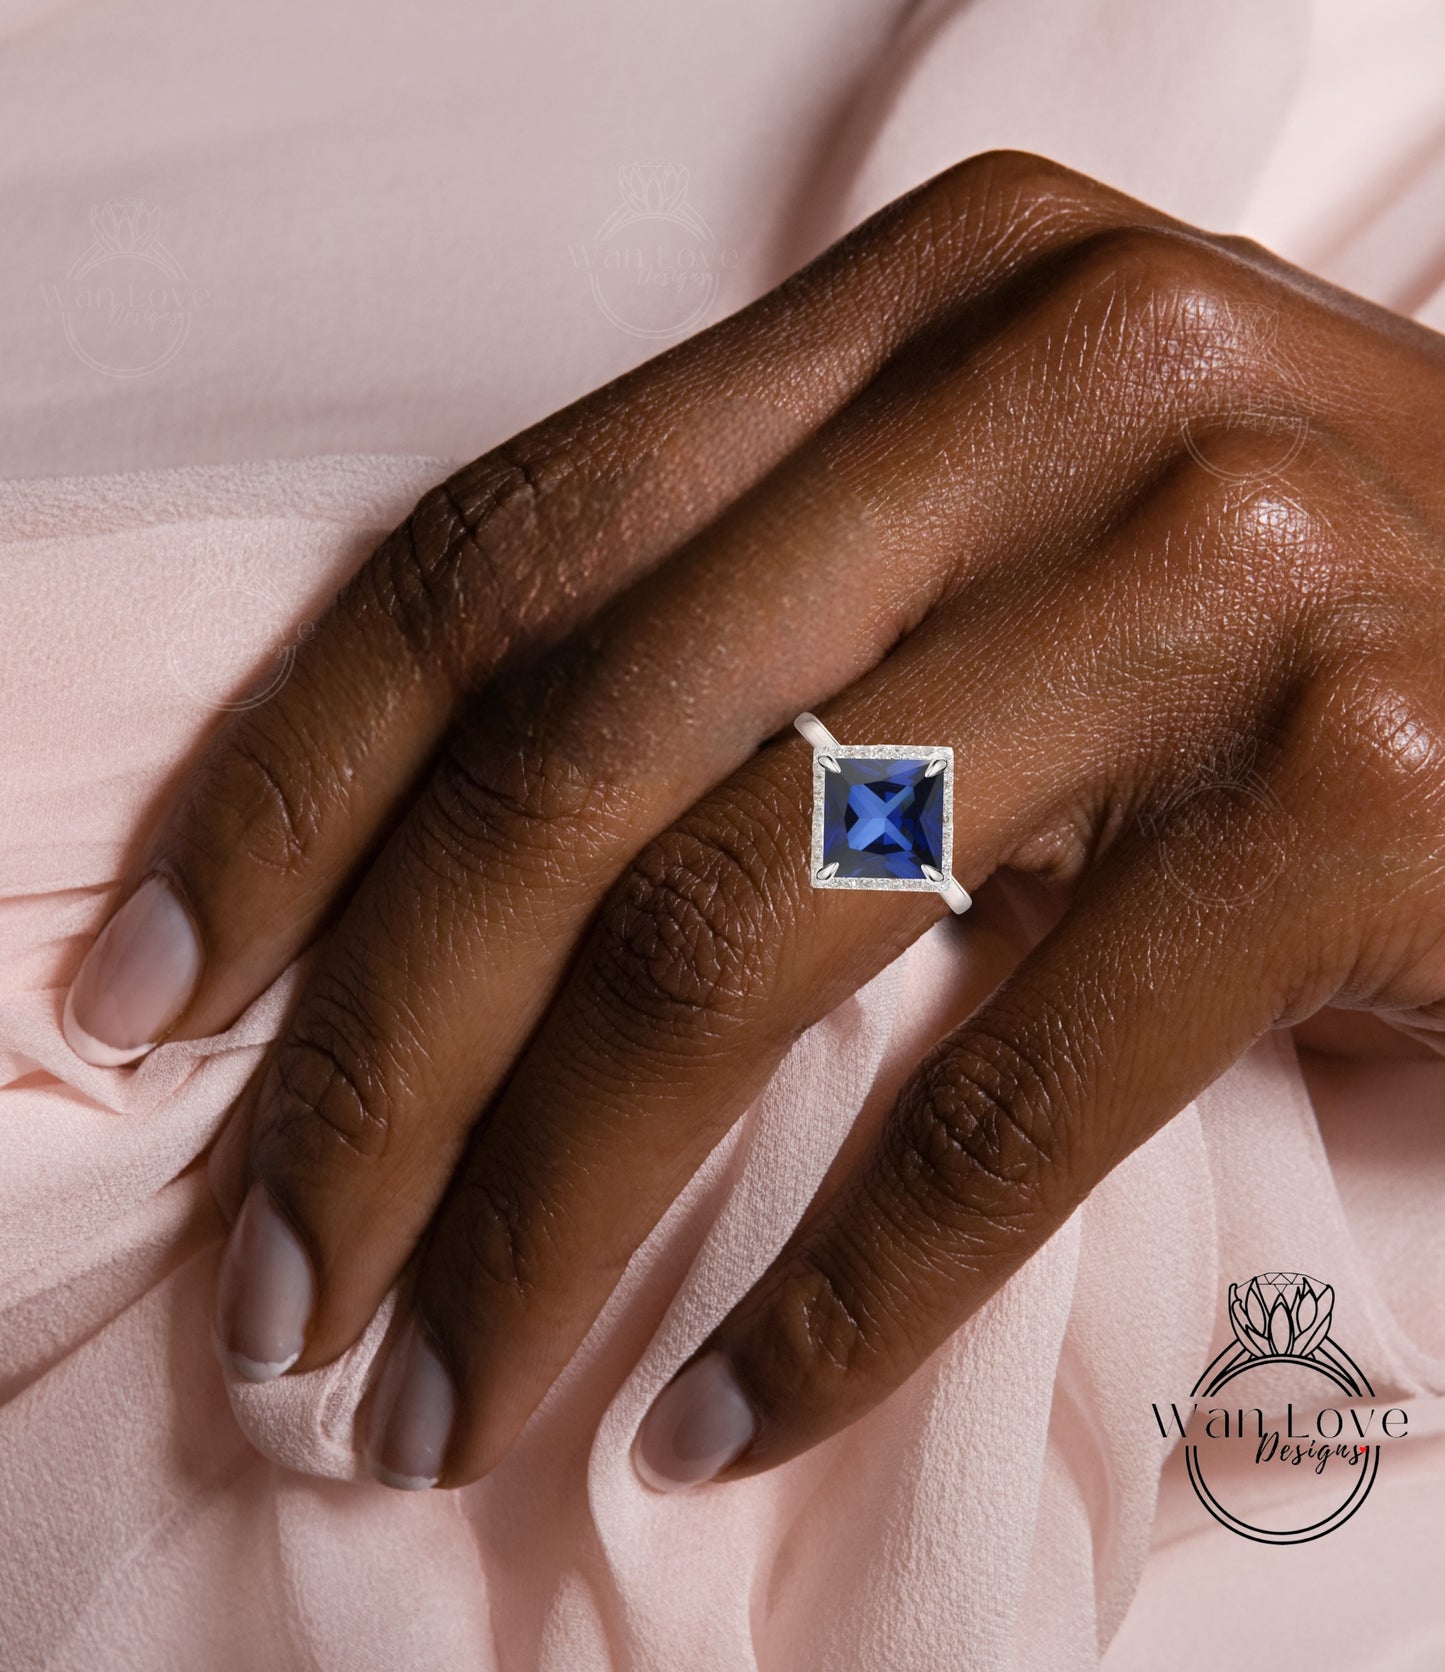 Kite Diamond halo Ring, Blue Sapphire Diamond Ring, Geometric Engagement Ring, Kite Plain Band Gemstone Ring